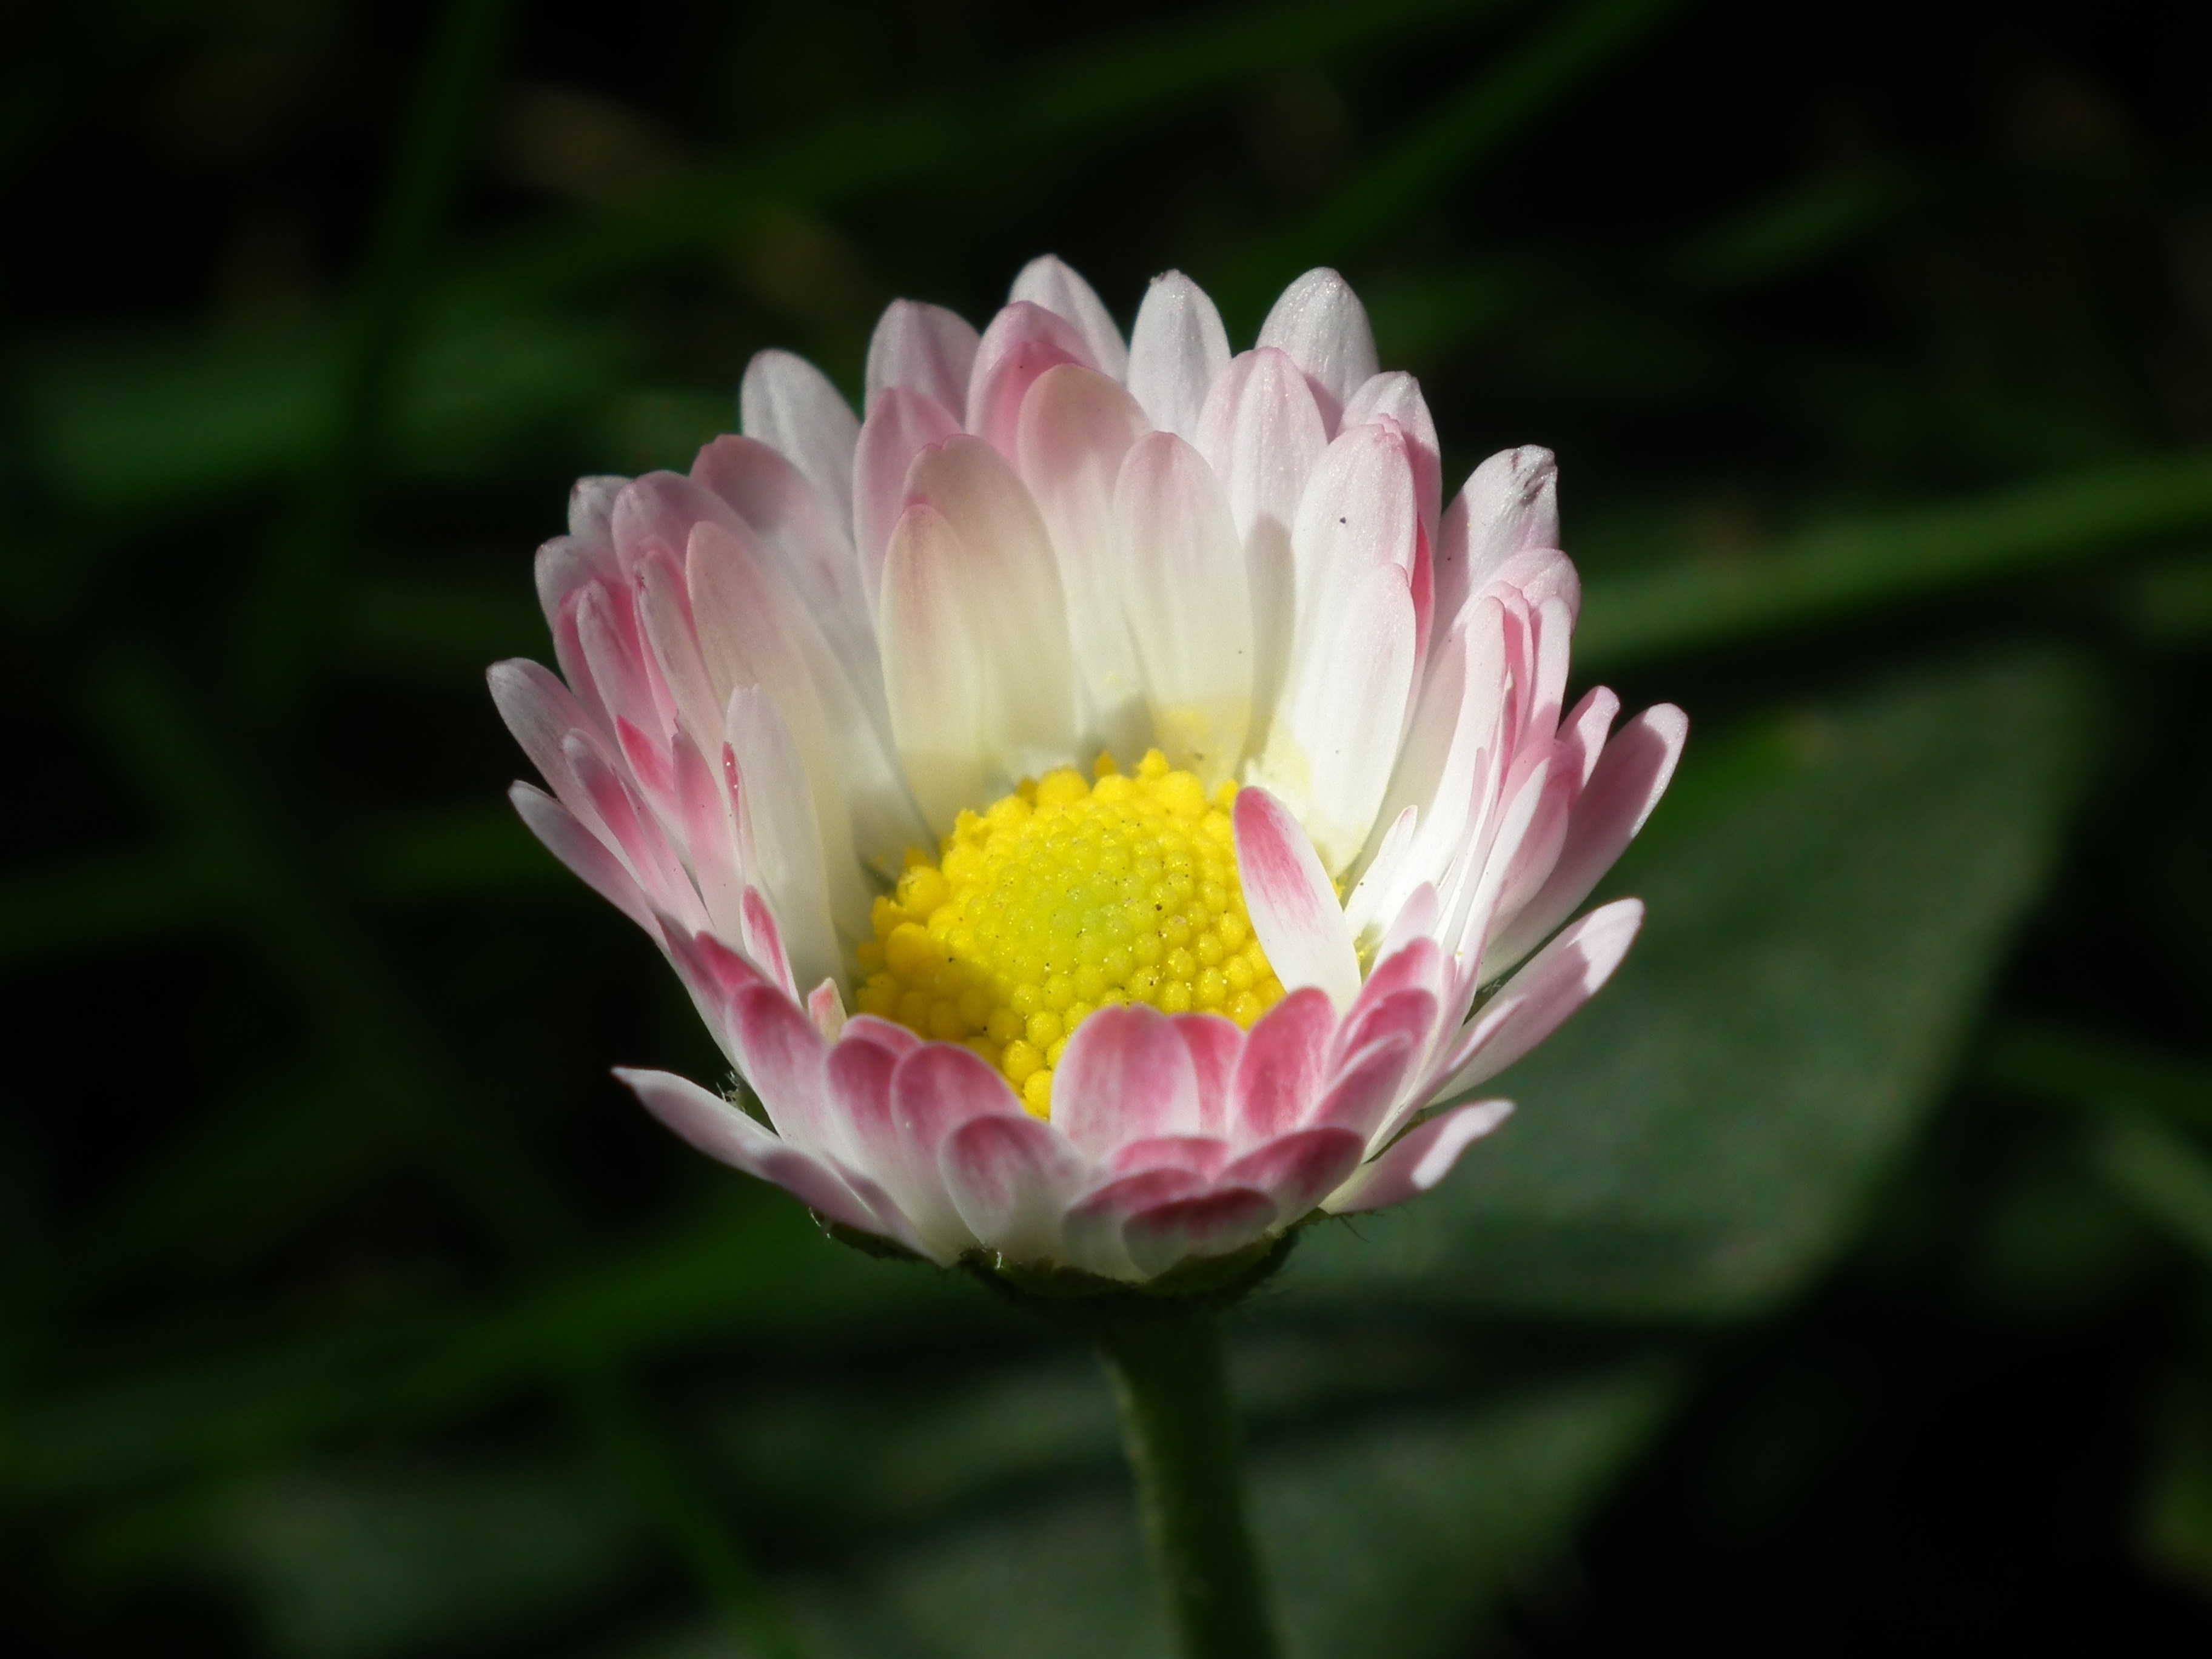 bloomed white-pink petaled flower